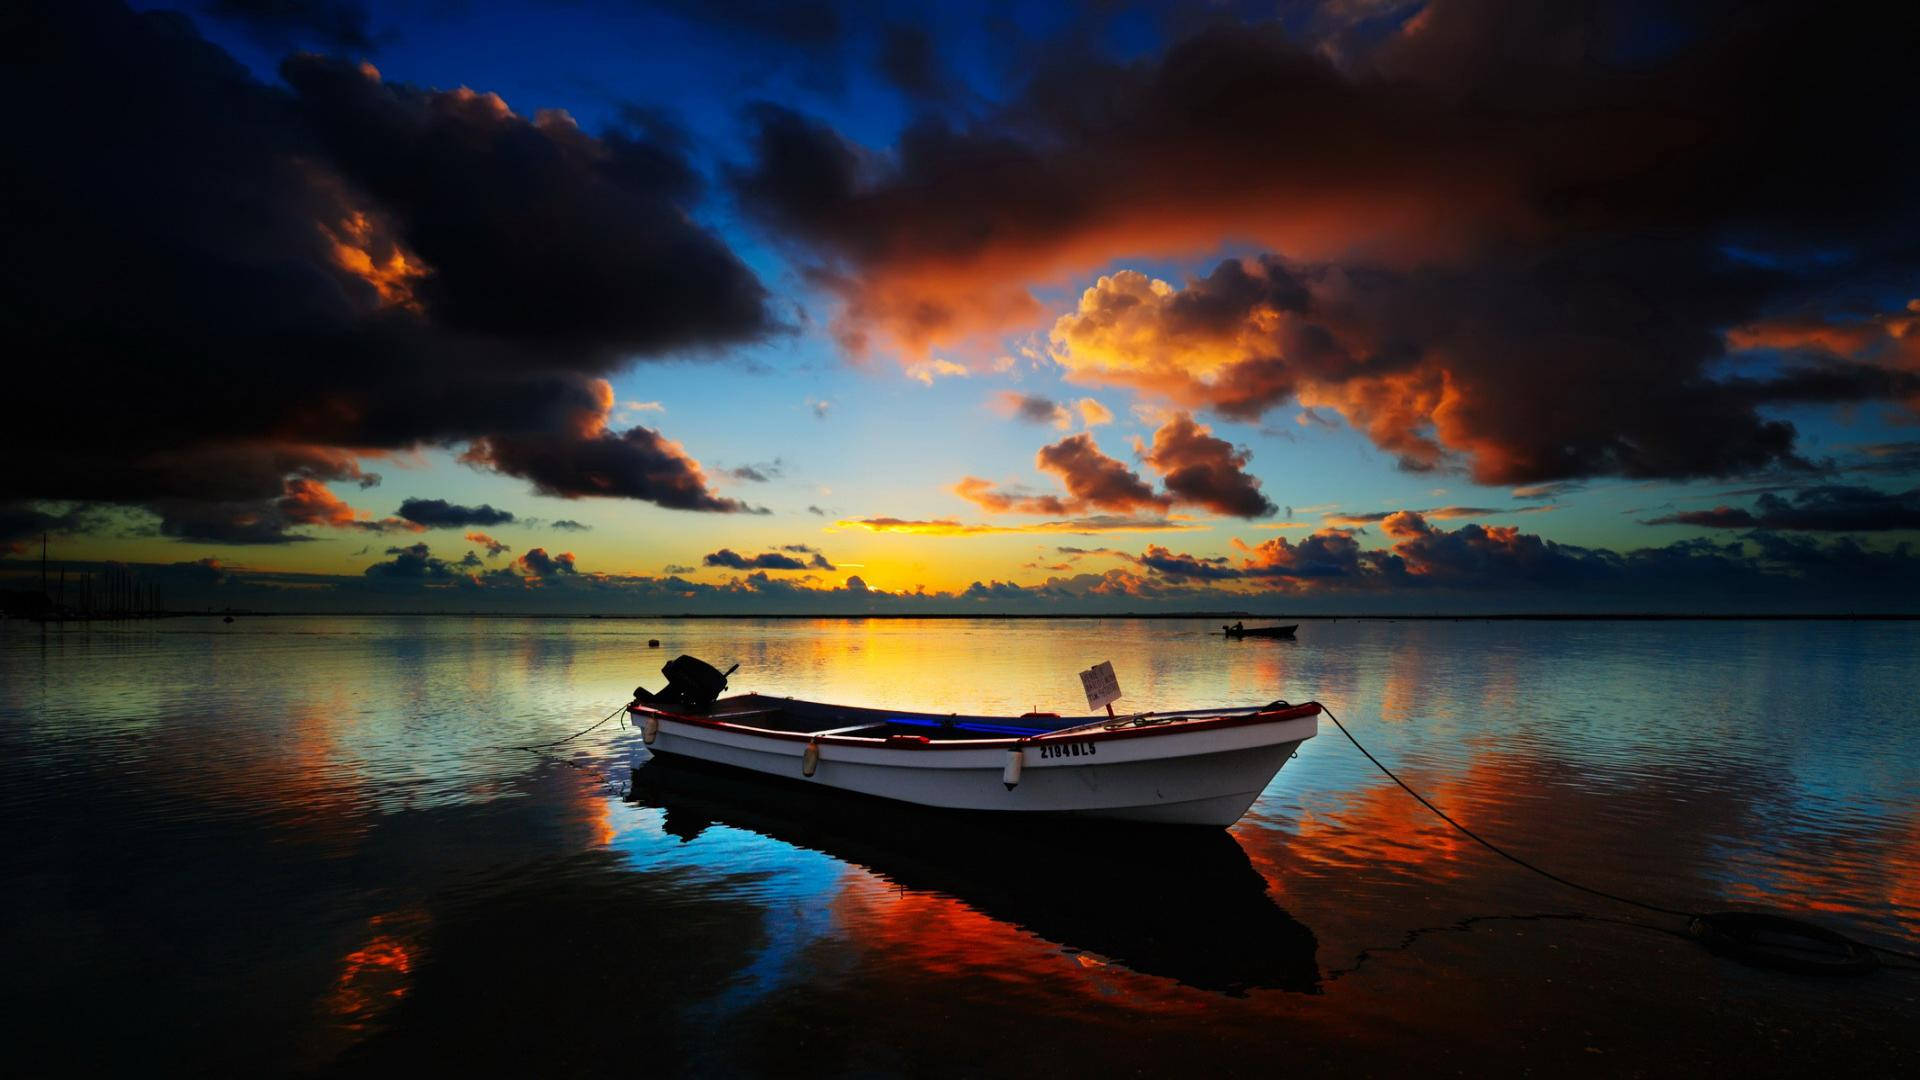 Peaceful Darkened Sky Over A Boat